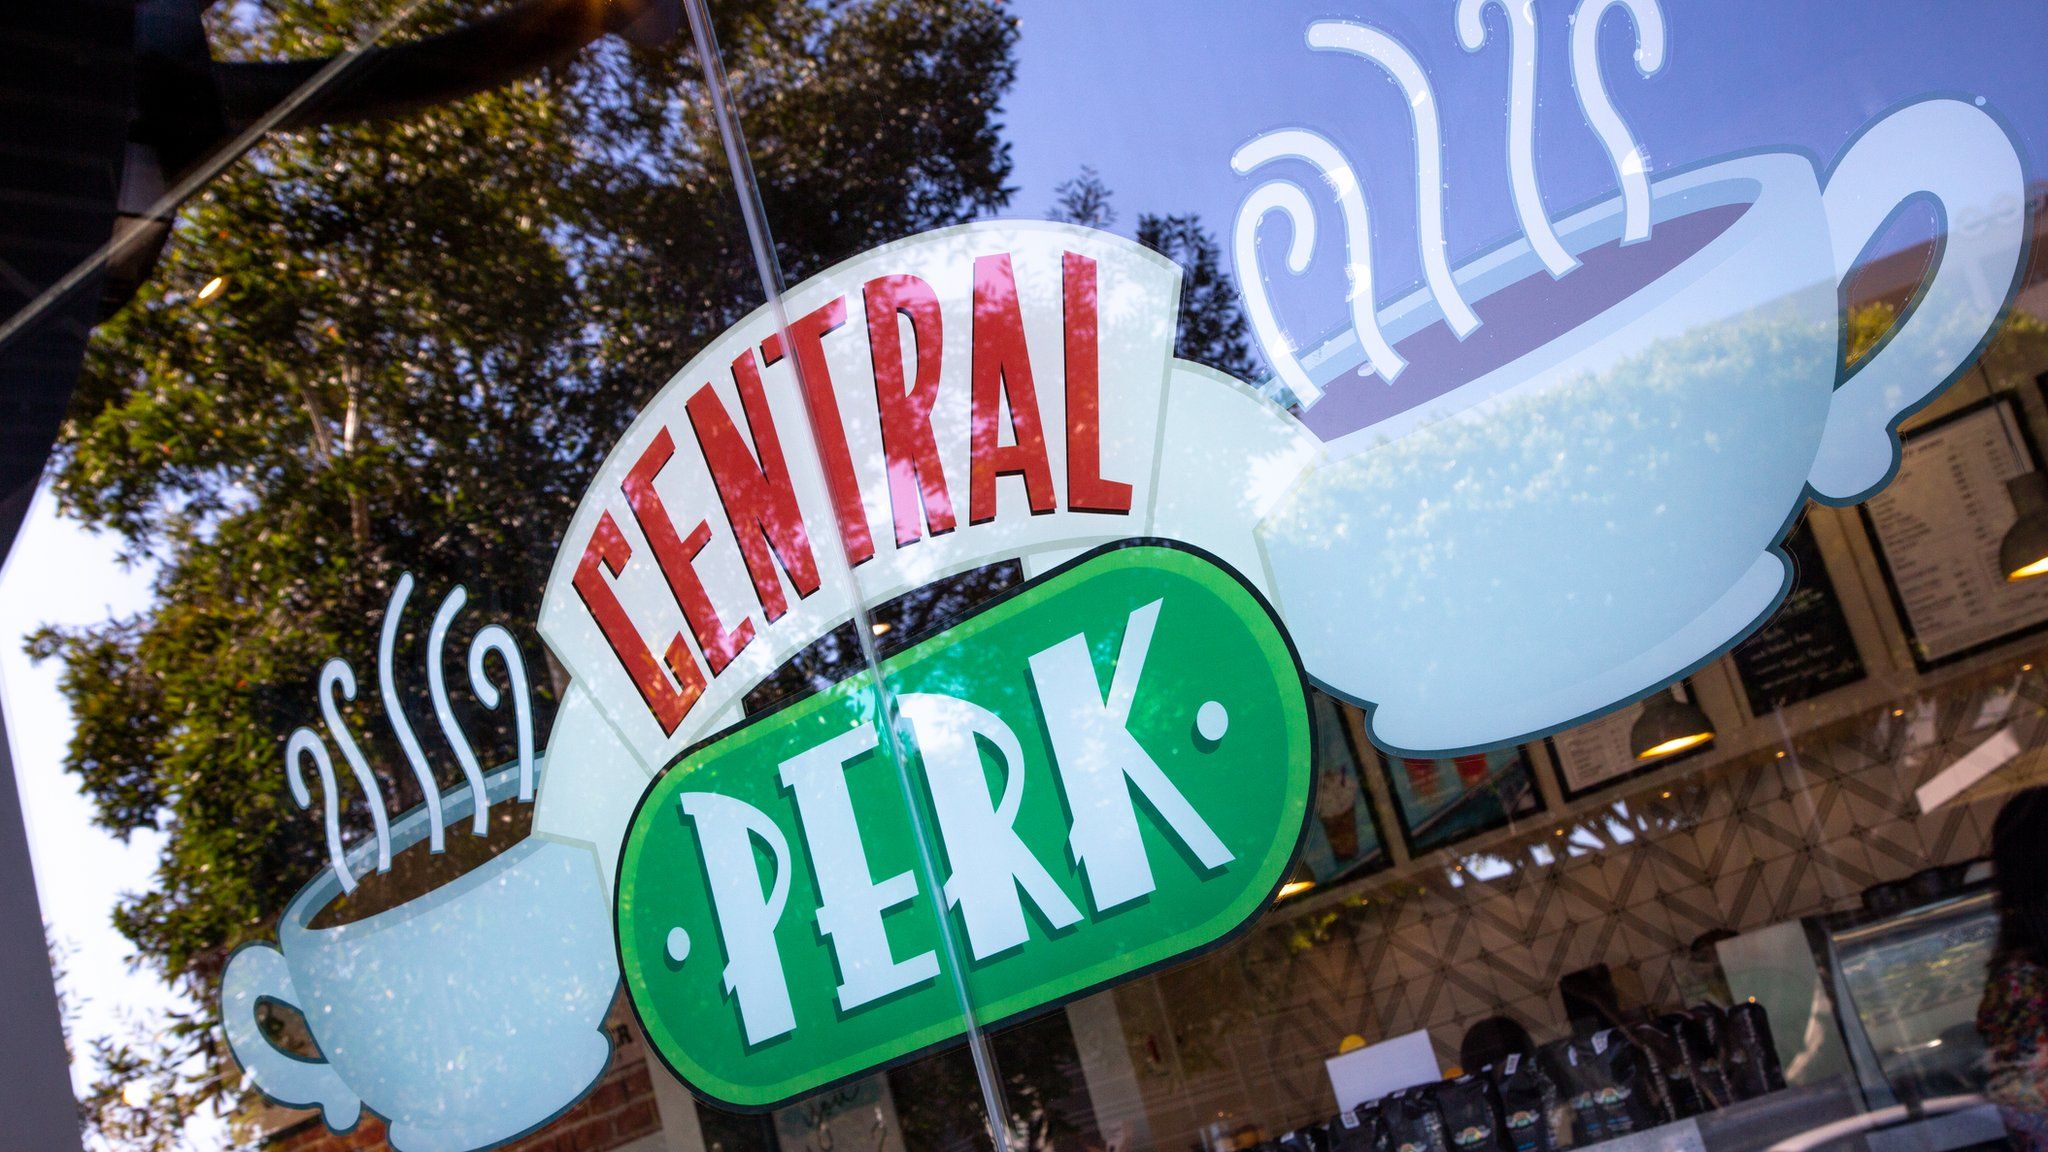 Central Perk cafe sign